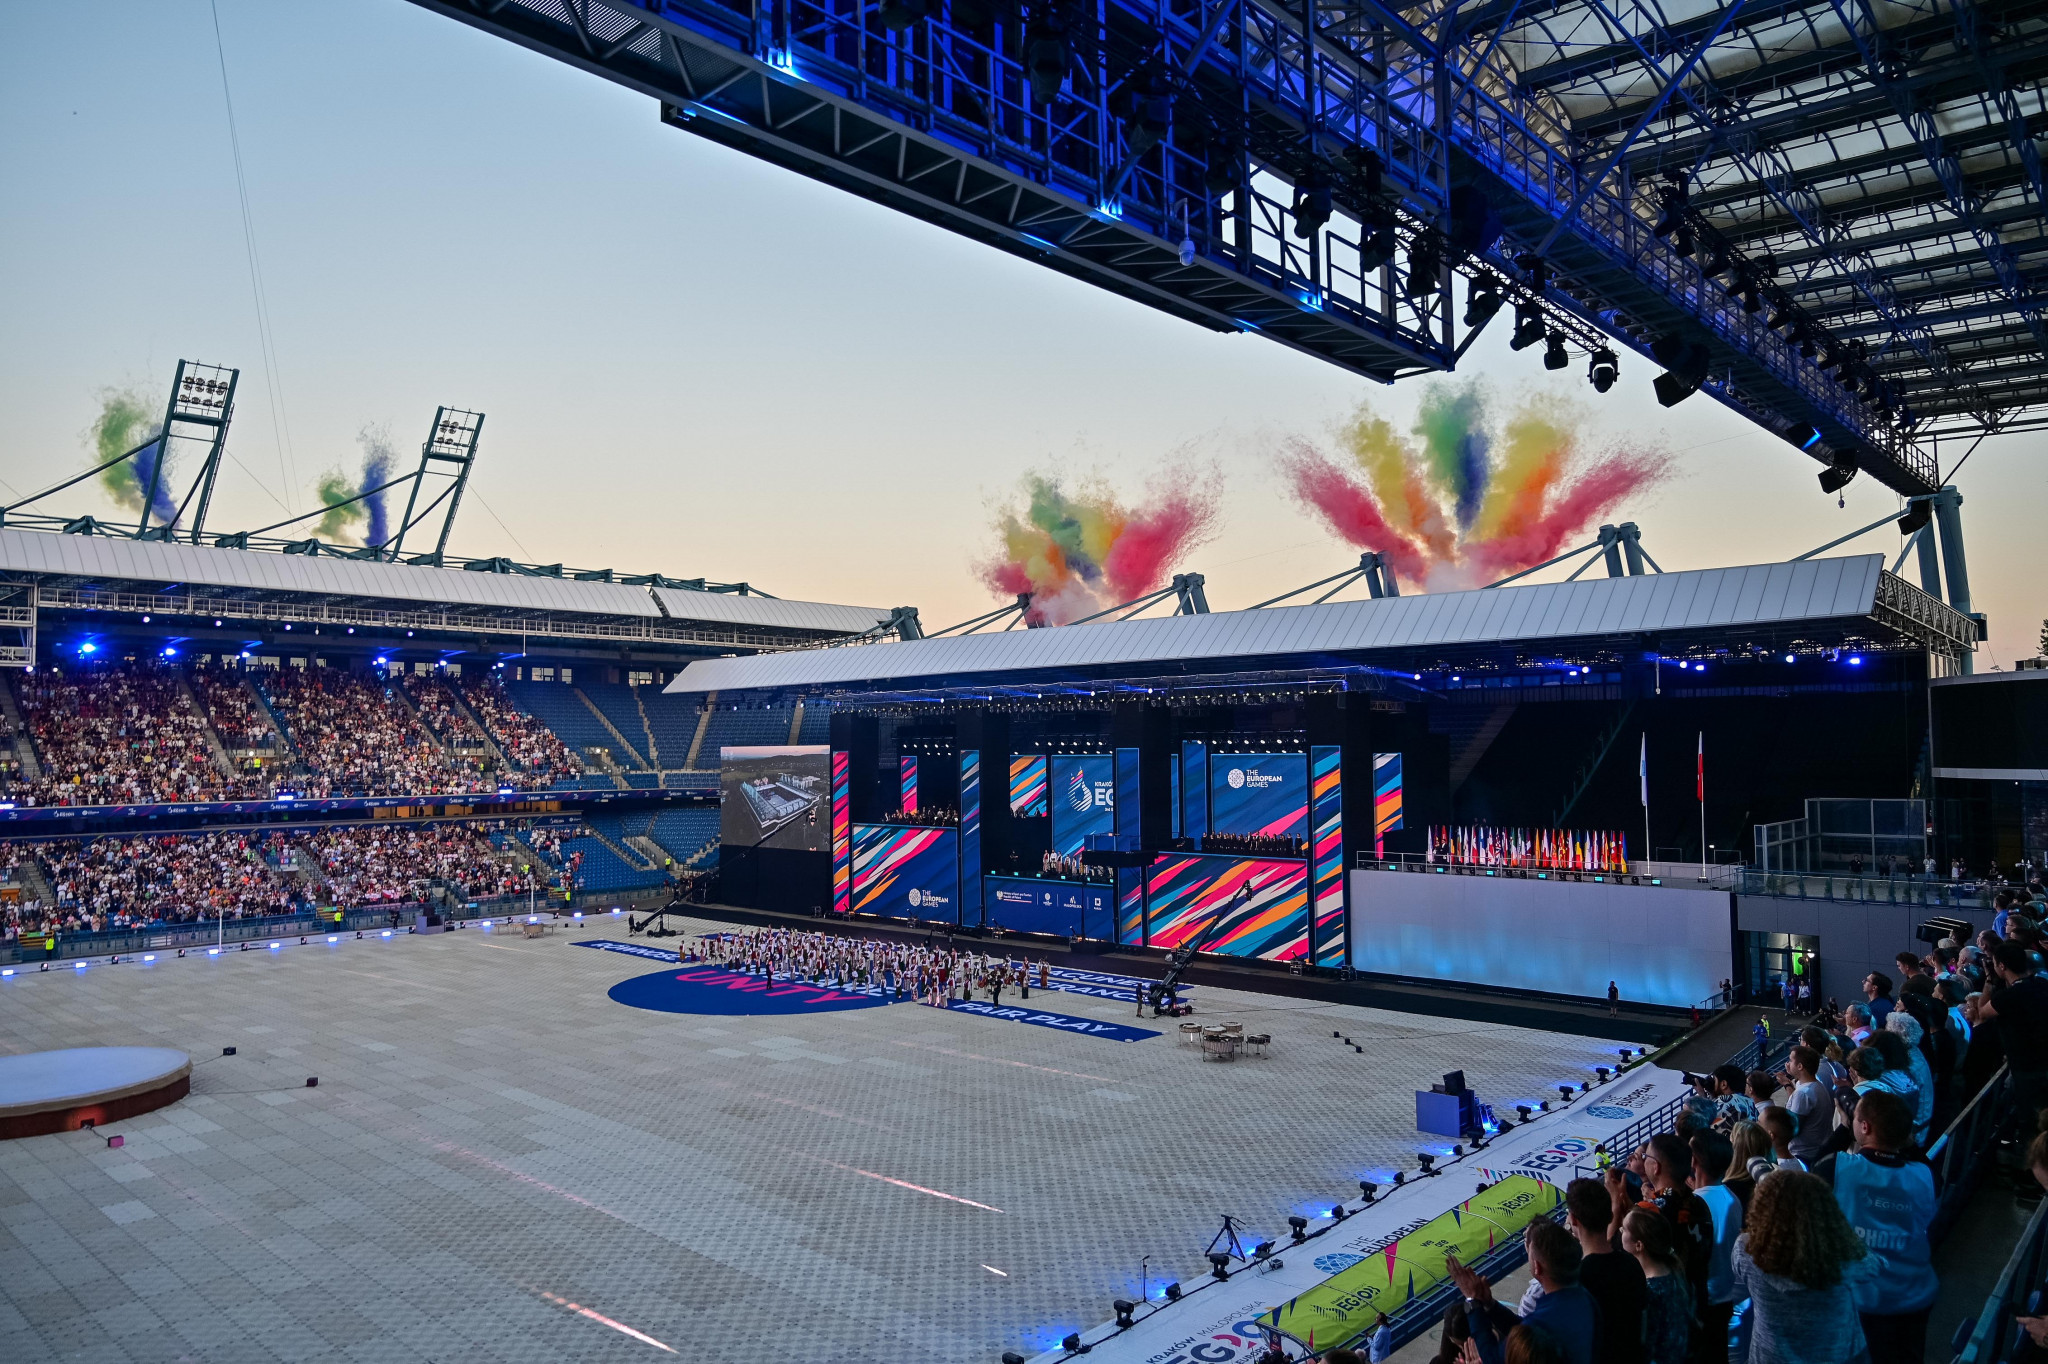 insidethegames is reporting LIVE from the Kraków-Małopolska 2023 European Games